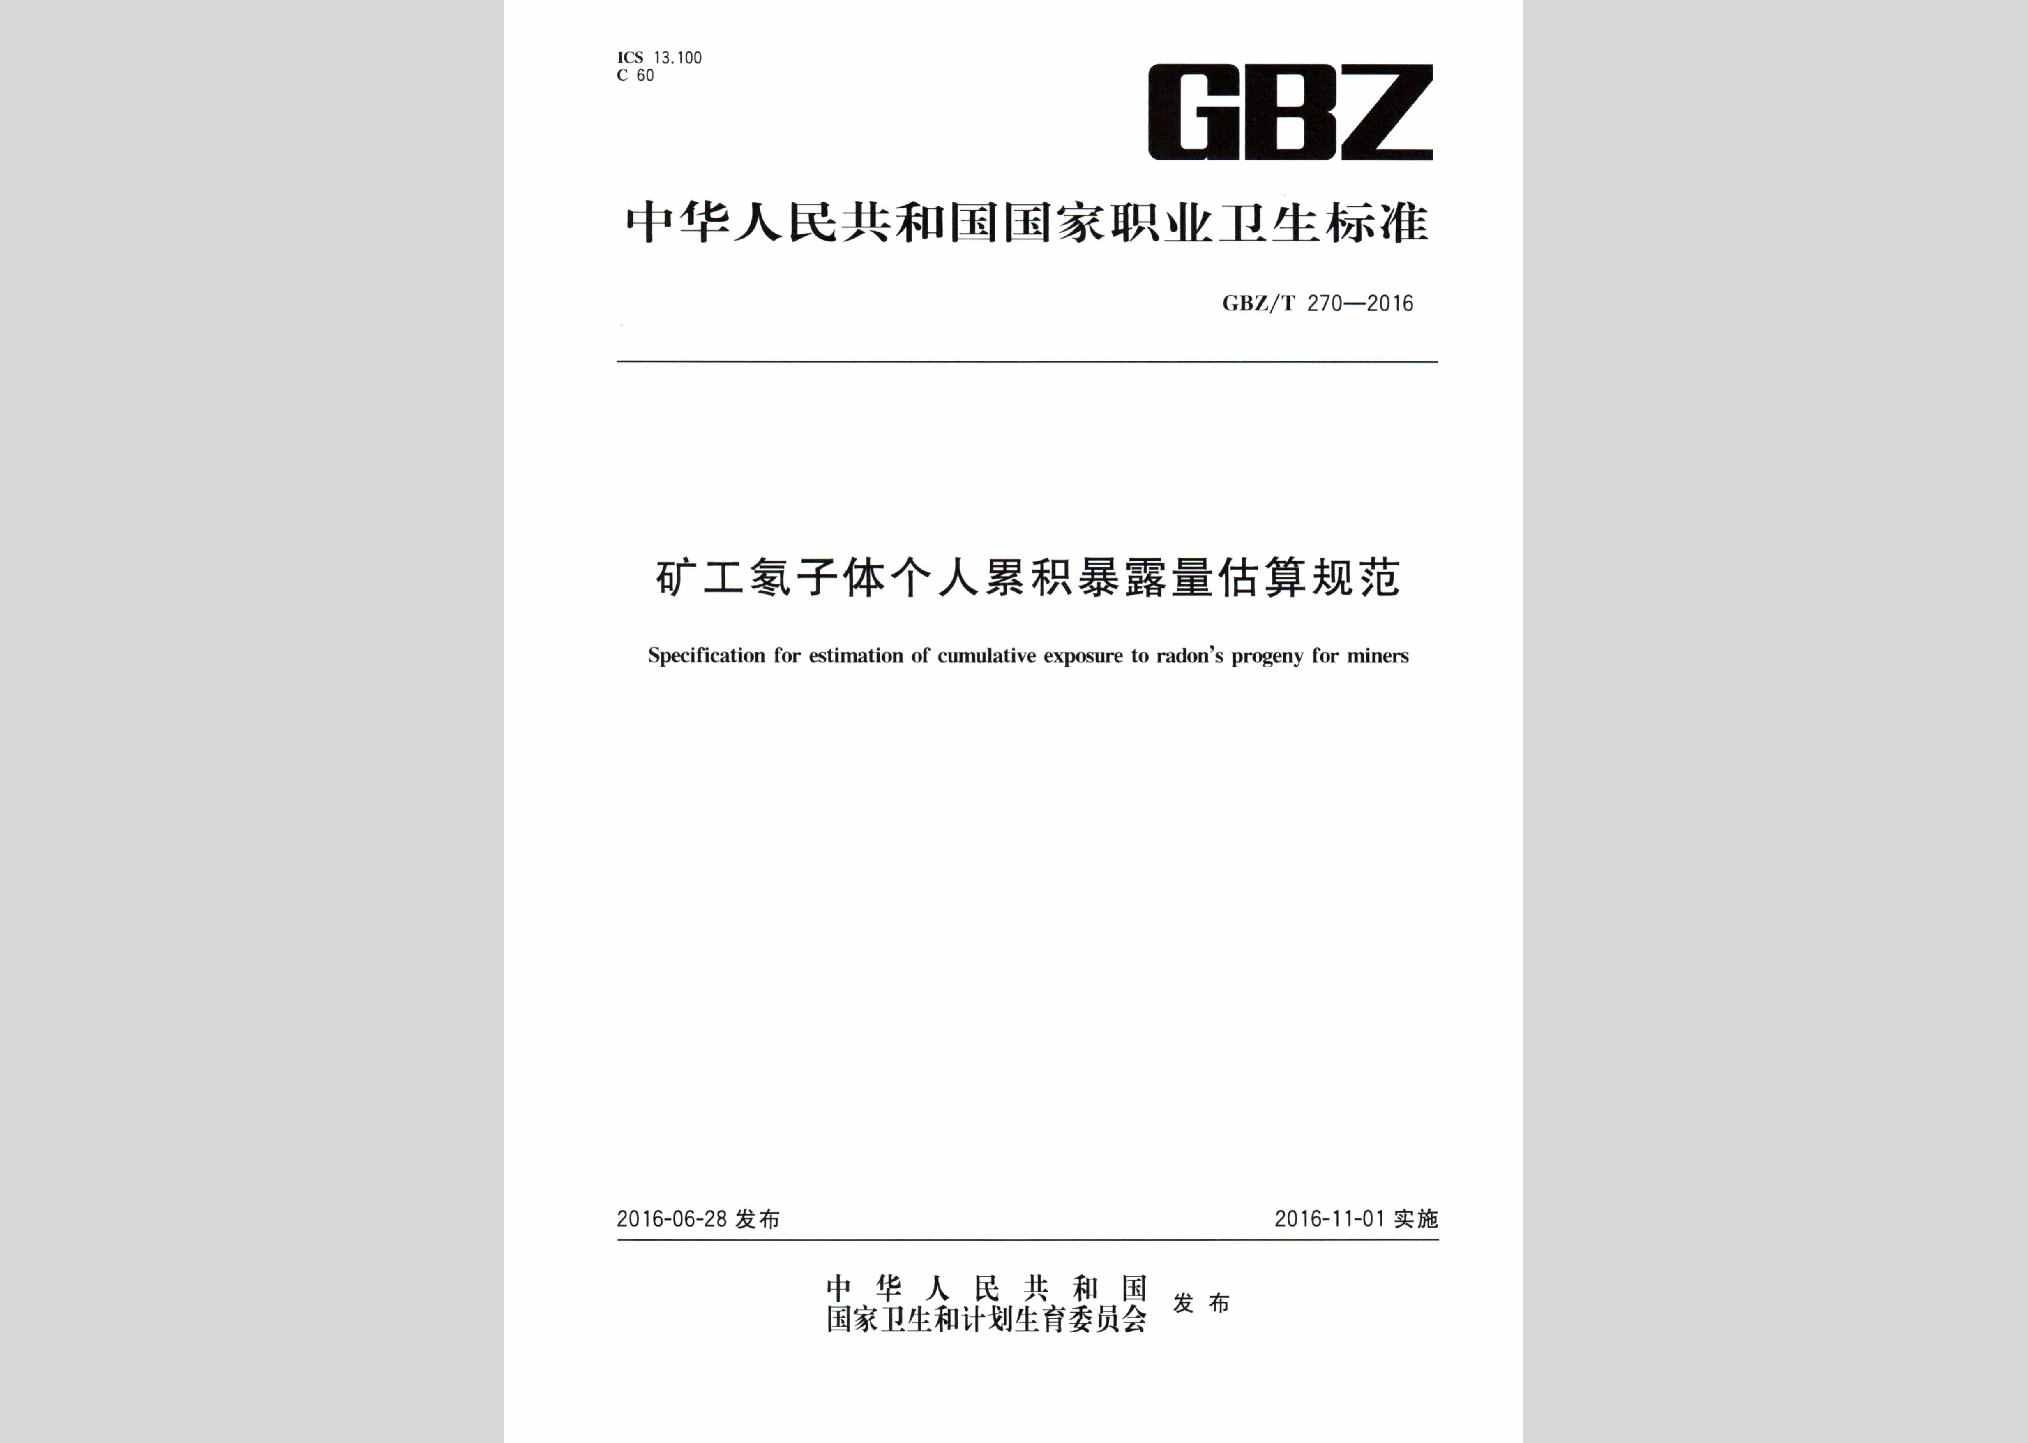 GBZ/T270-2016：矿工氡子体个人累积暴露量估规范